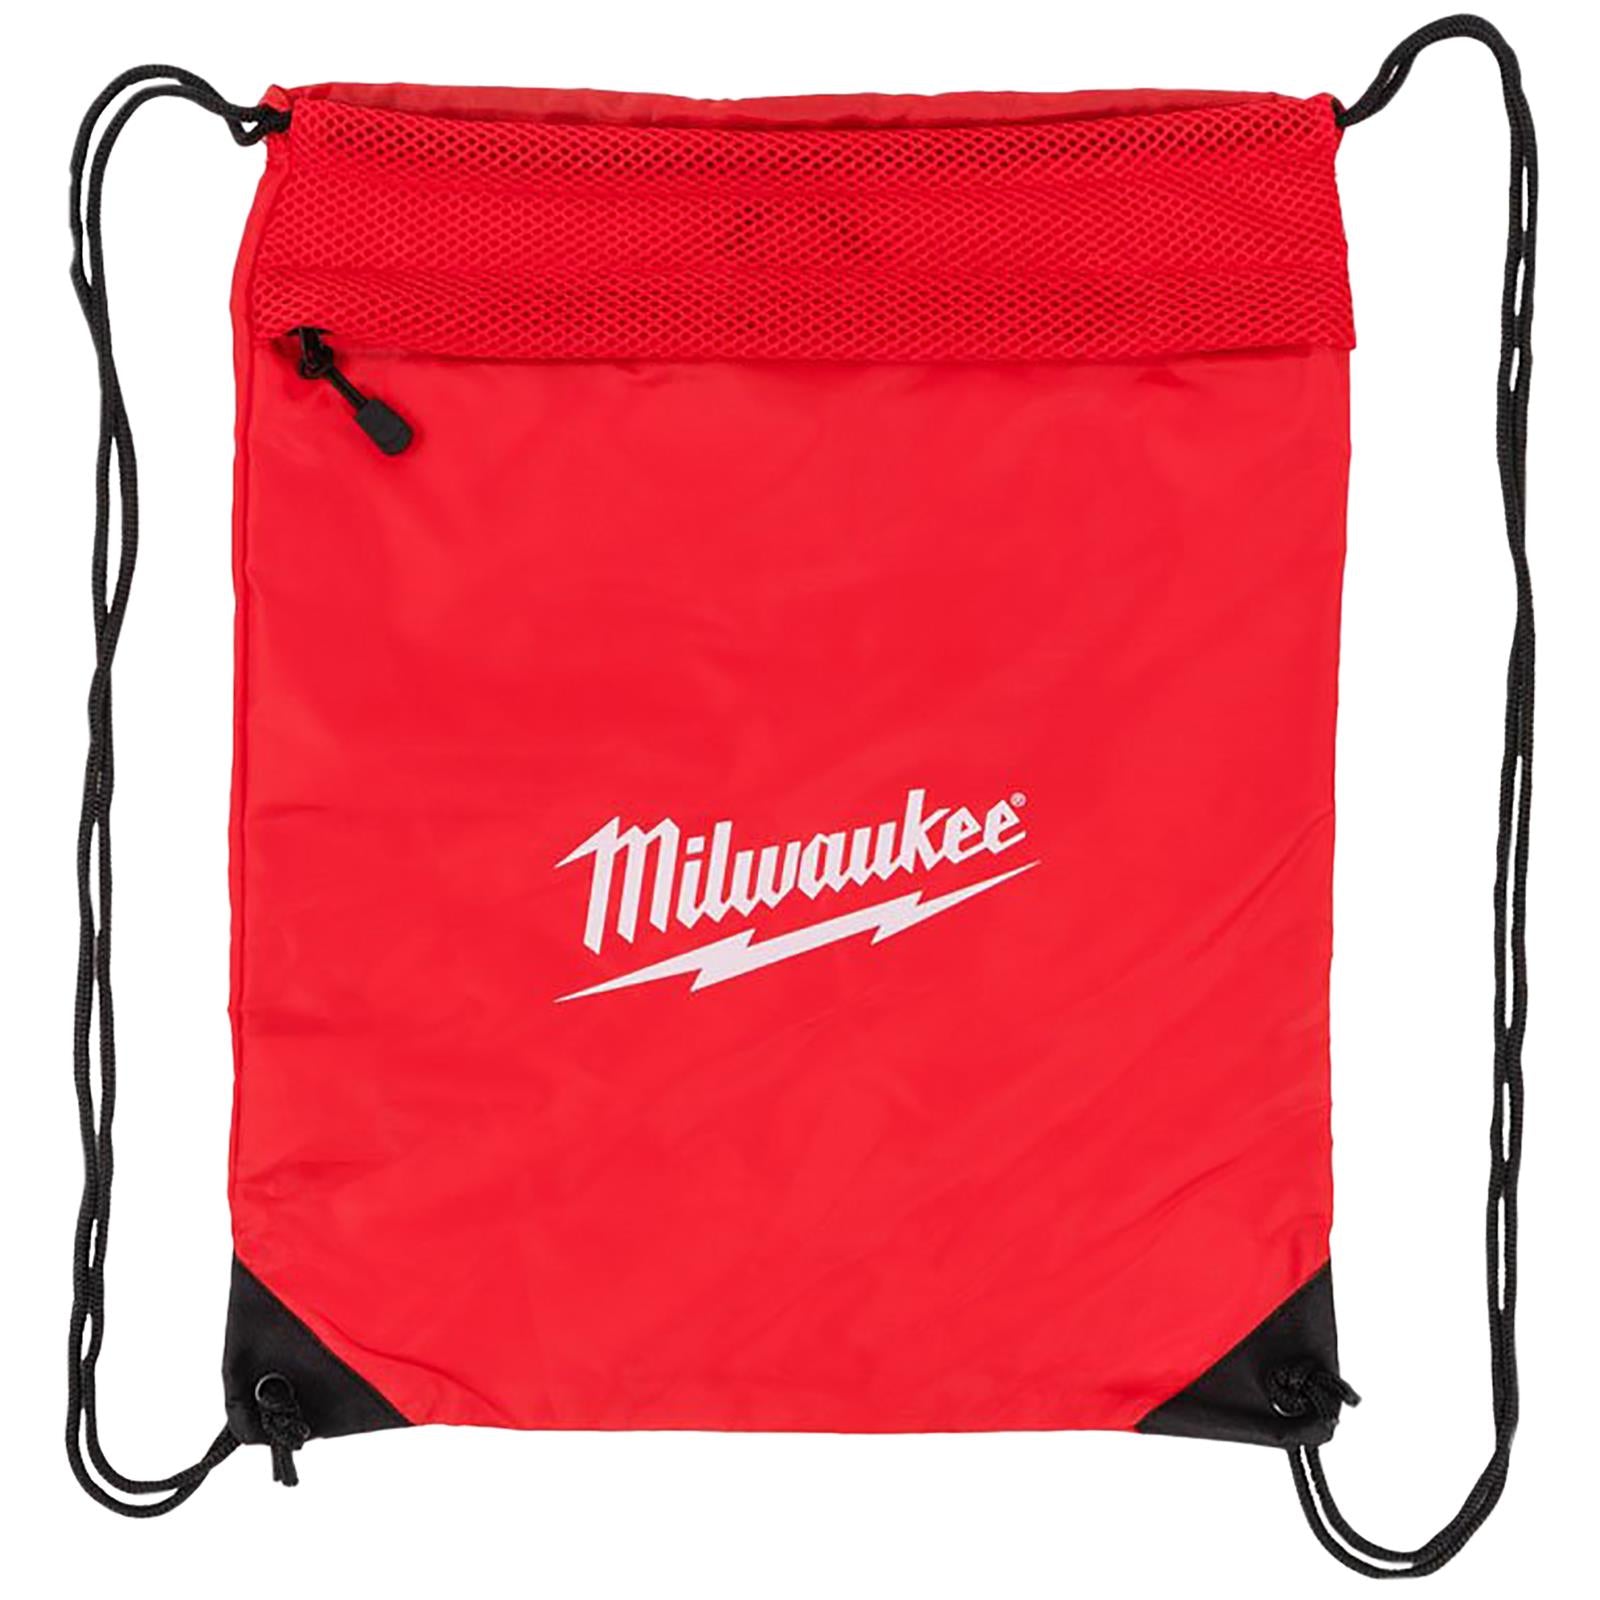 Milwaukee Drawstring Bag